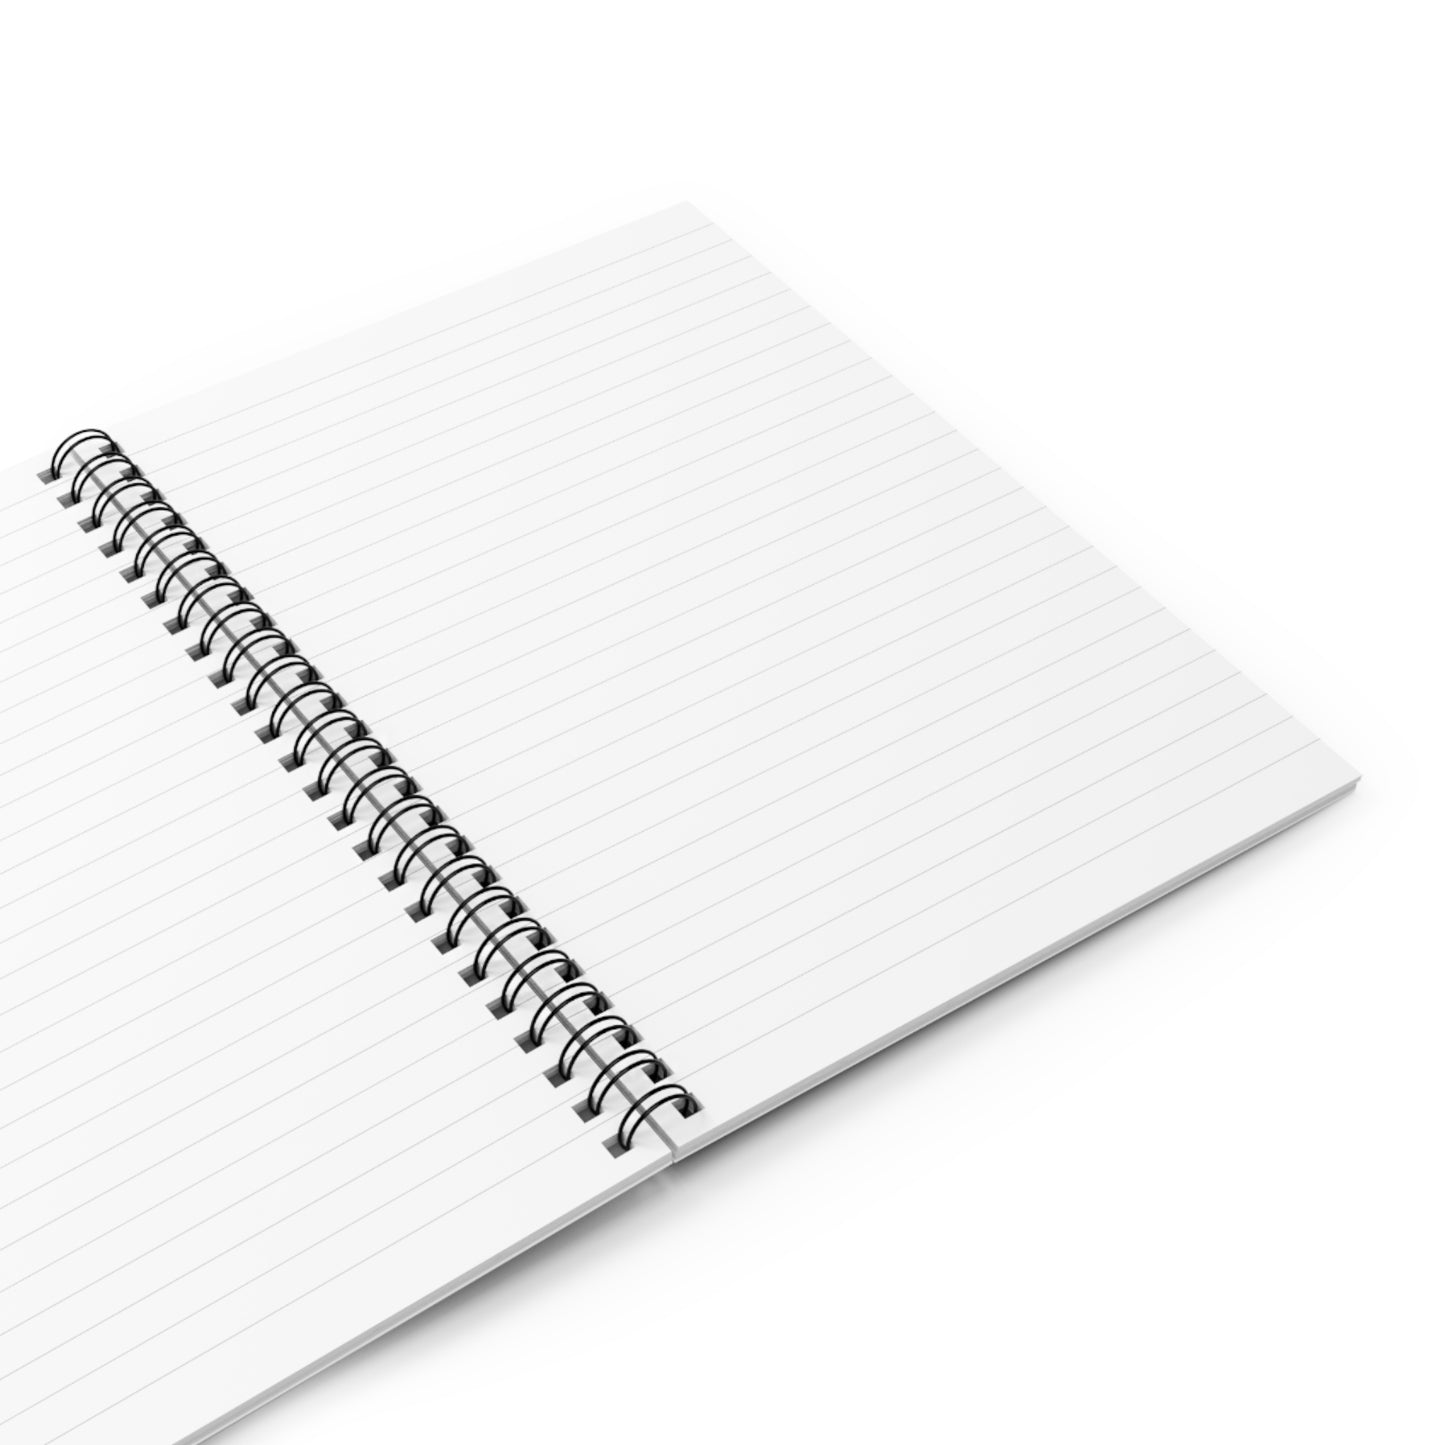 SBCRS Notebook, logo w/black background